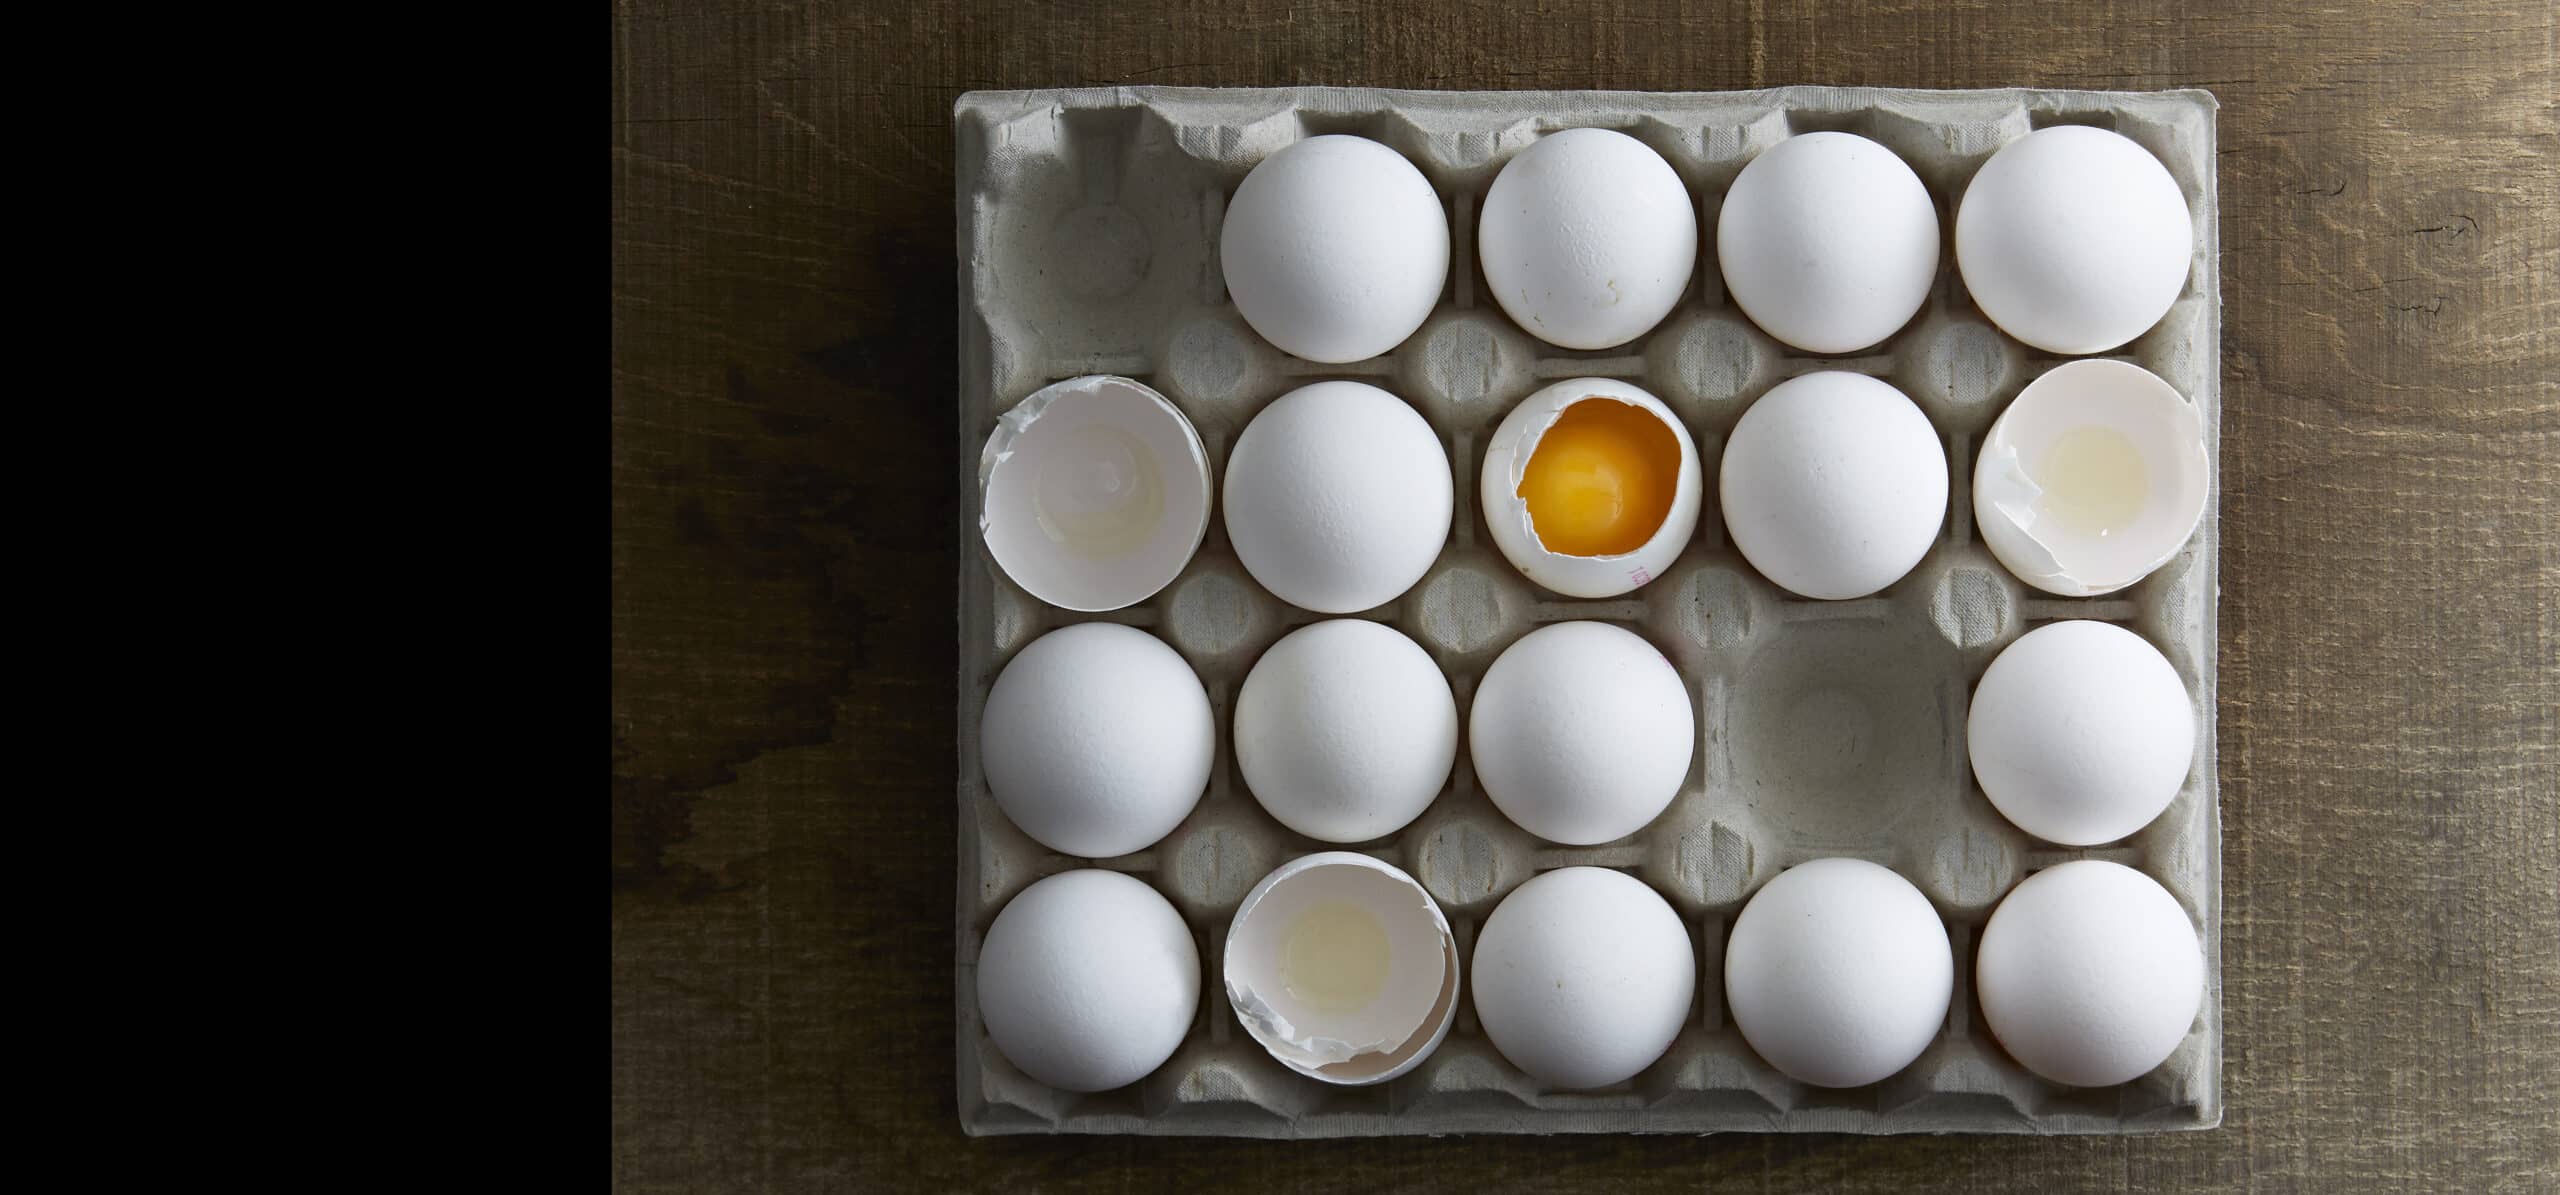 œufs - carnet de photographe